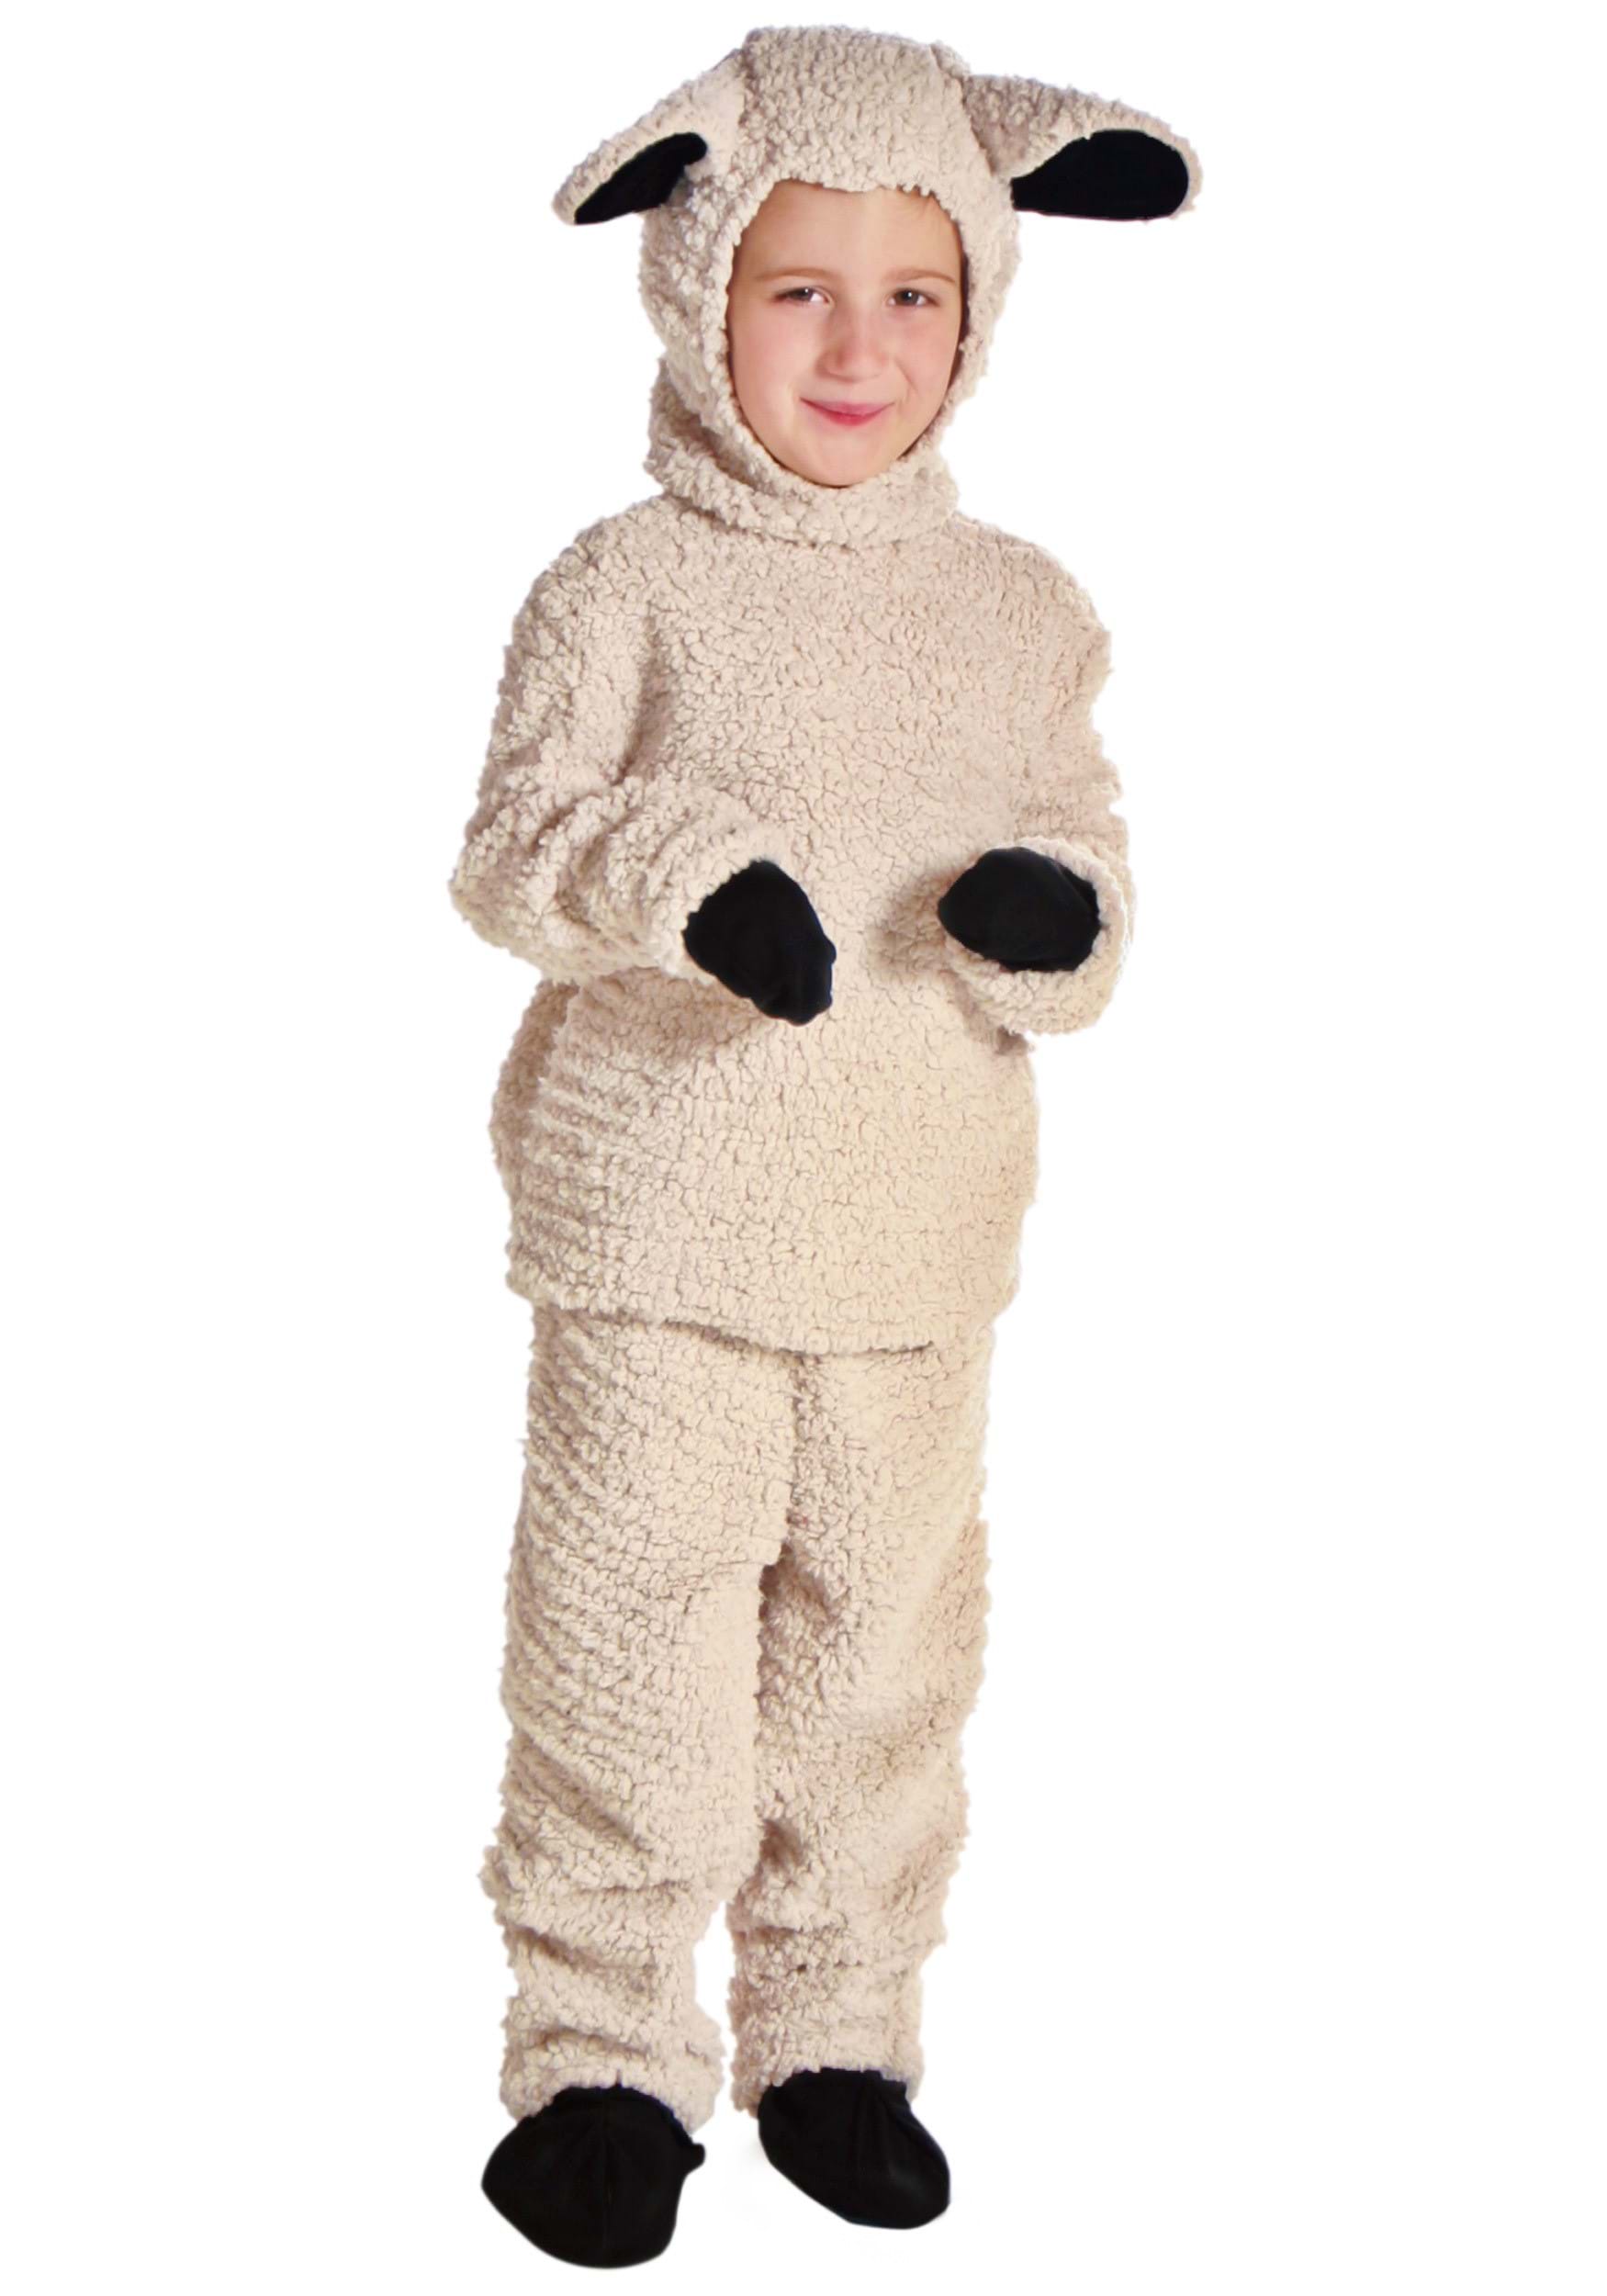 Sheep Costume for Kids